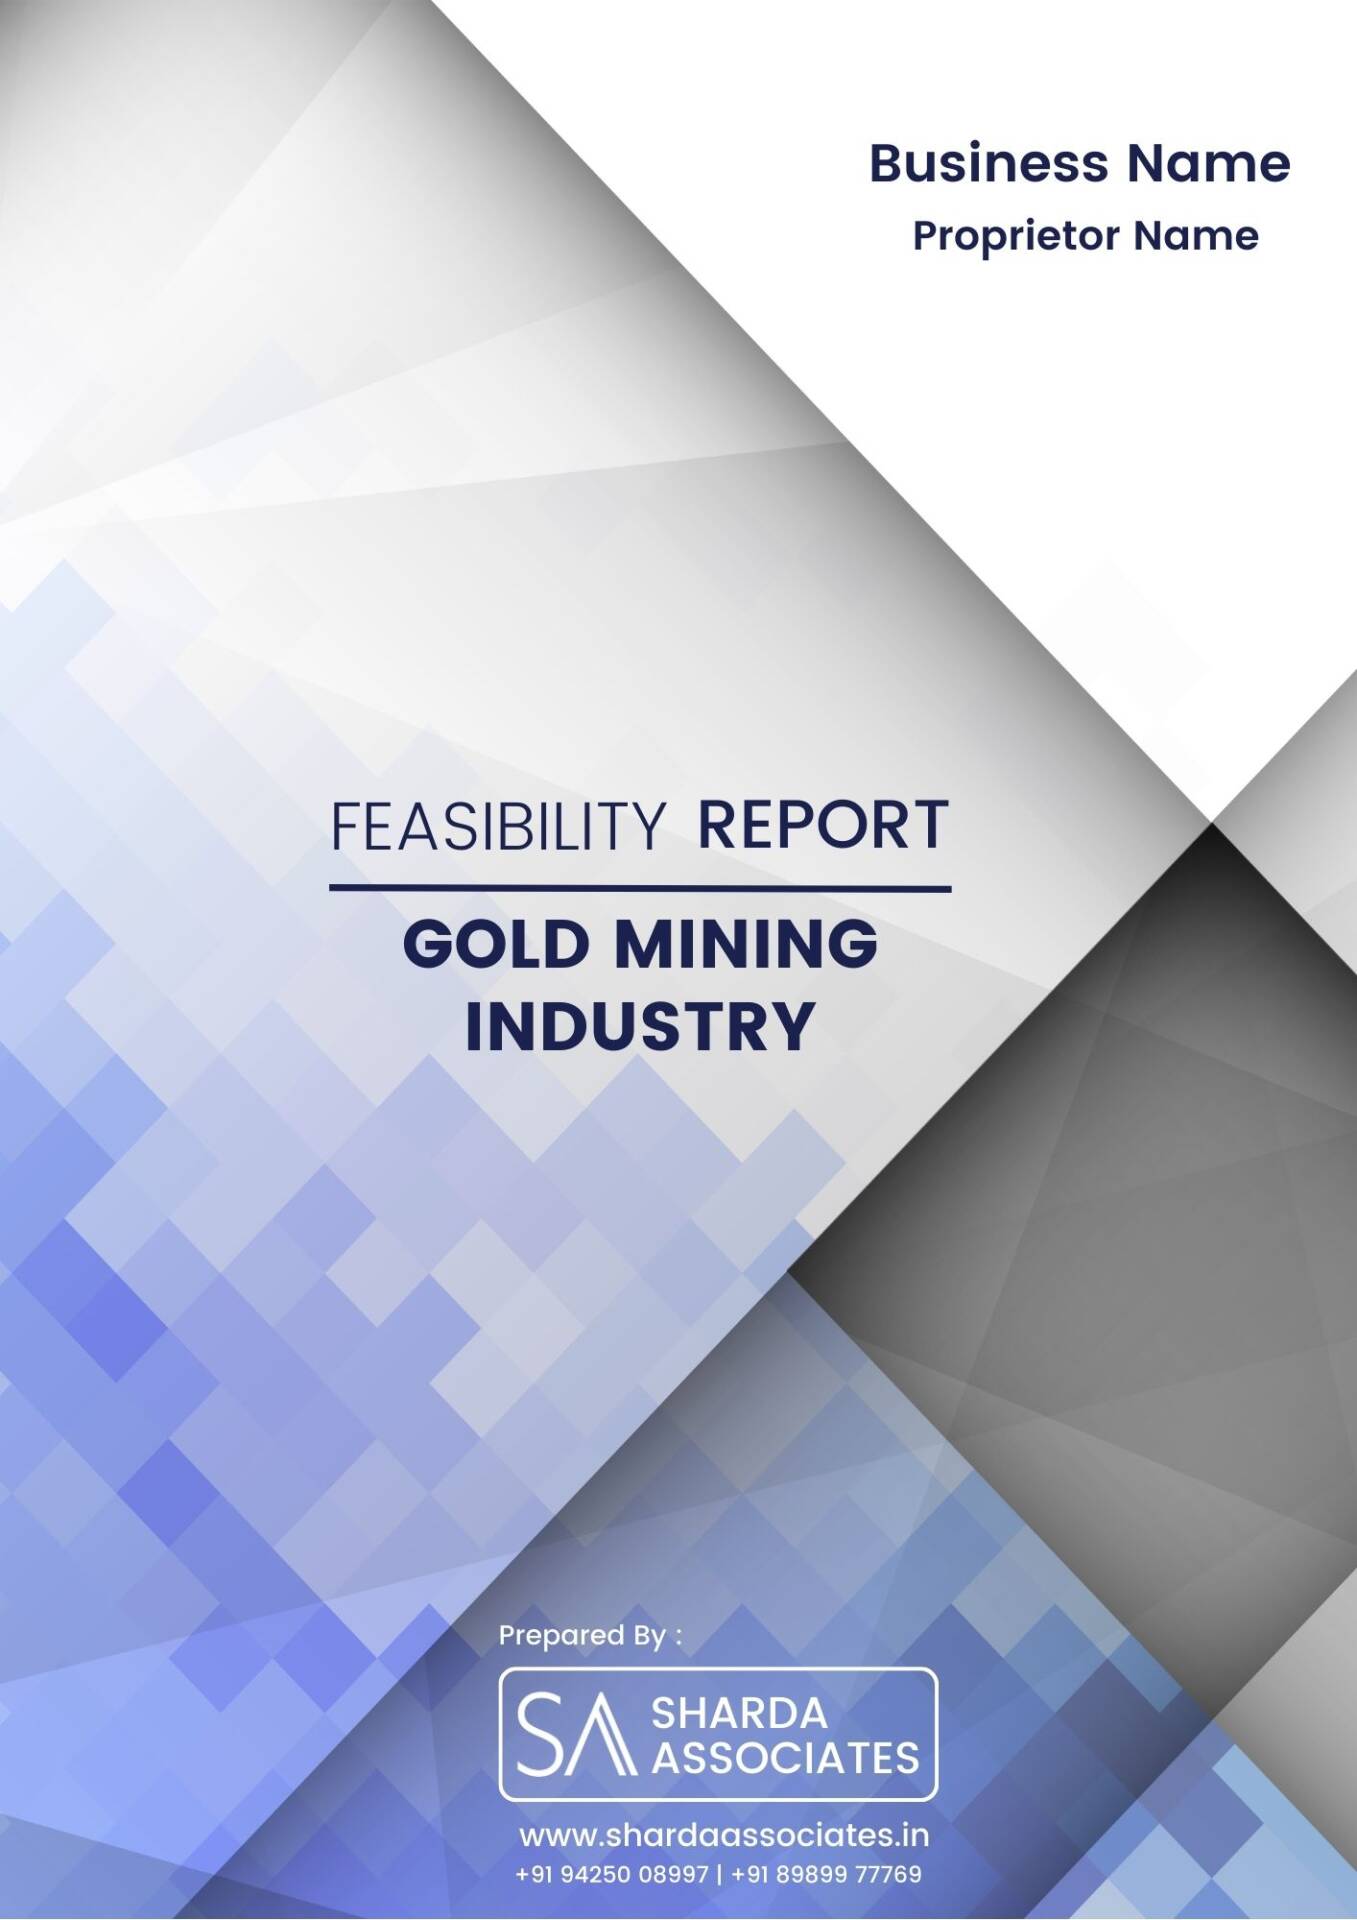 Gold mining industry